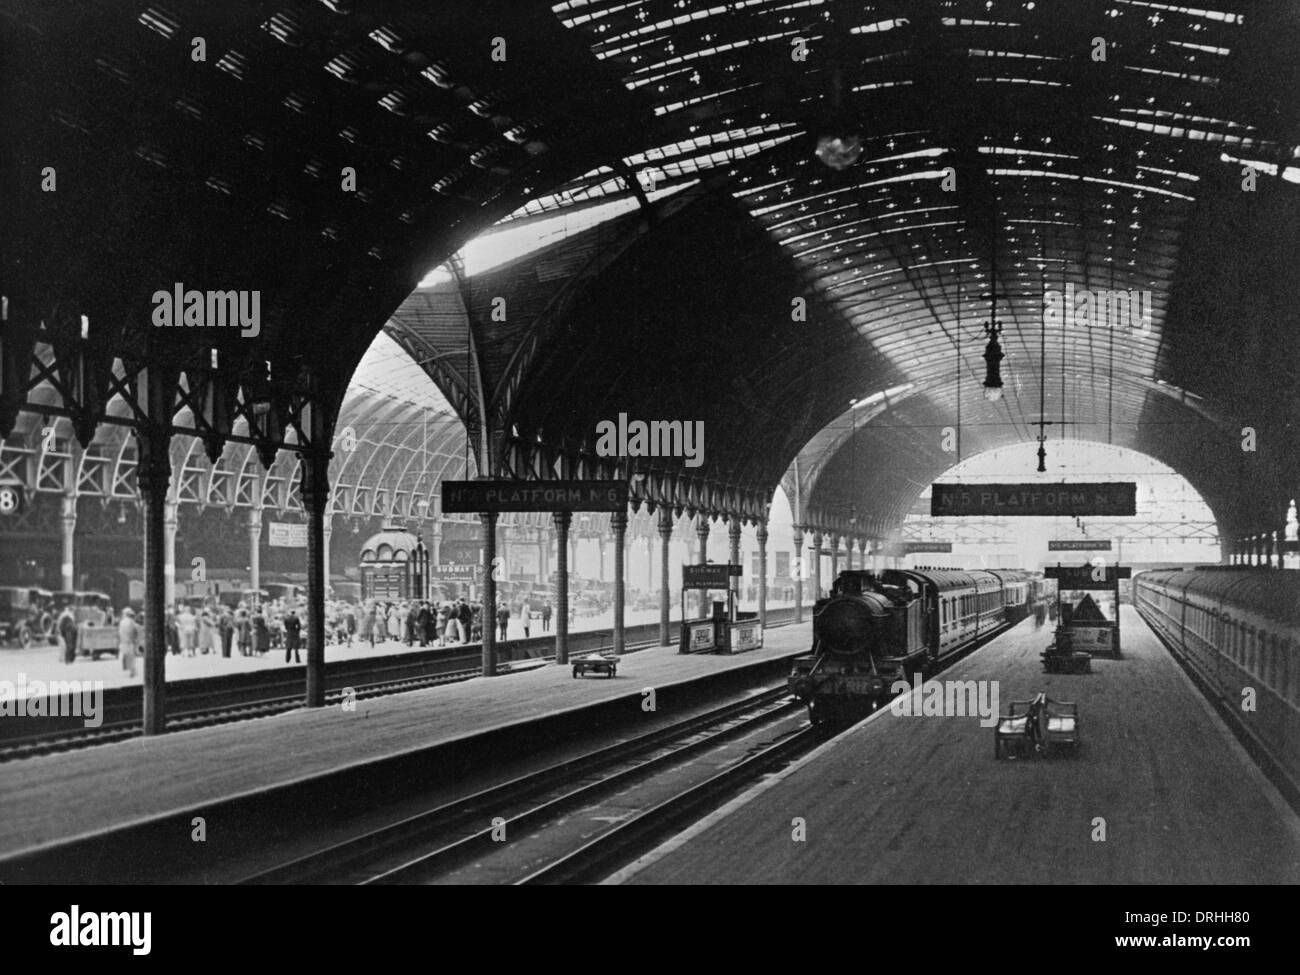 Paddington Station, London - Plattform 5 Stockfoto